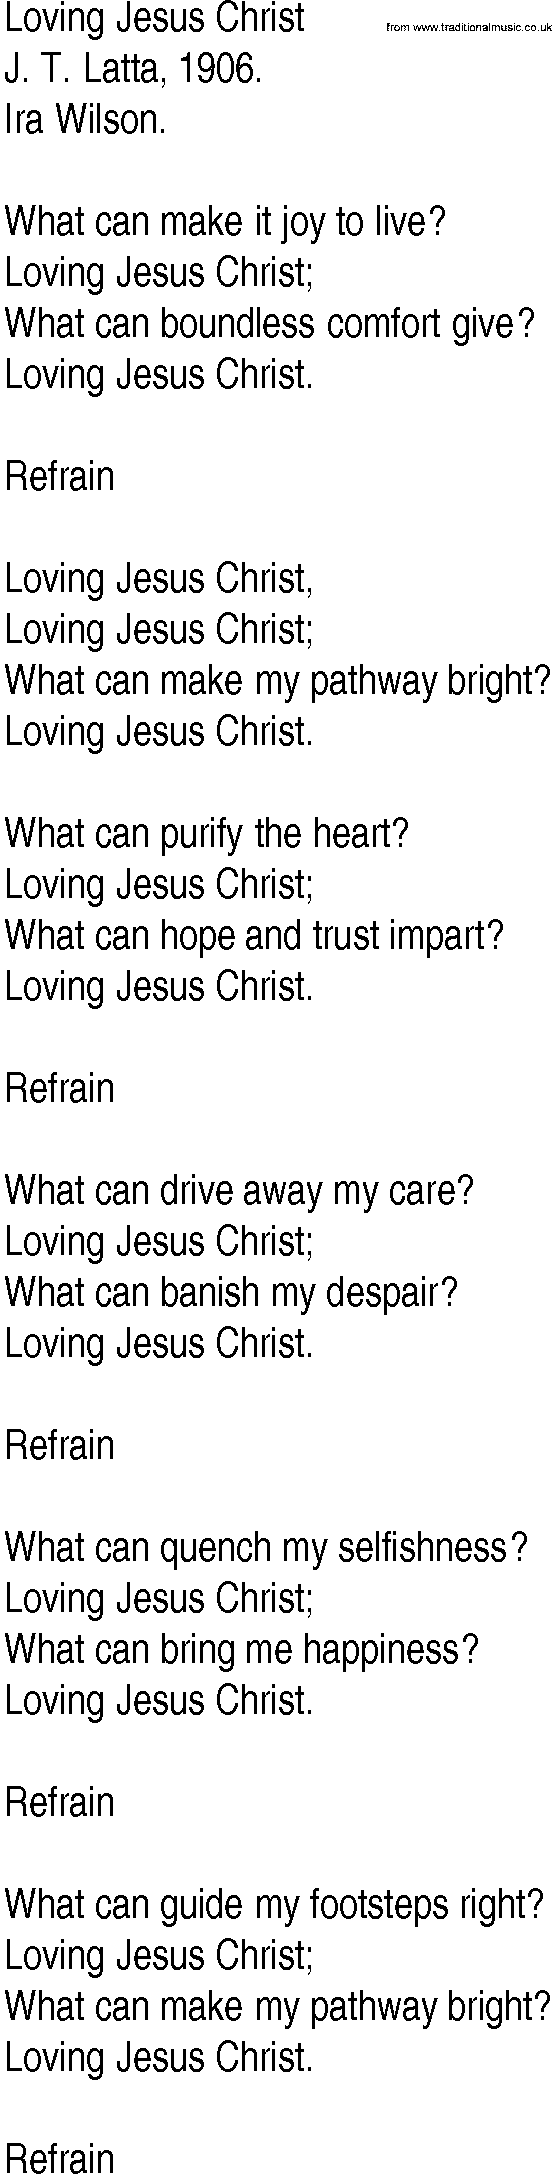 Hymn and Gospel Song: Loving Jesus Christ by J T Latta lyrics